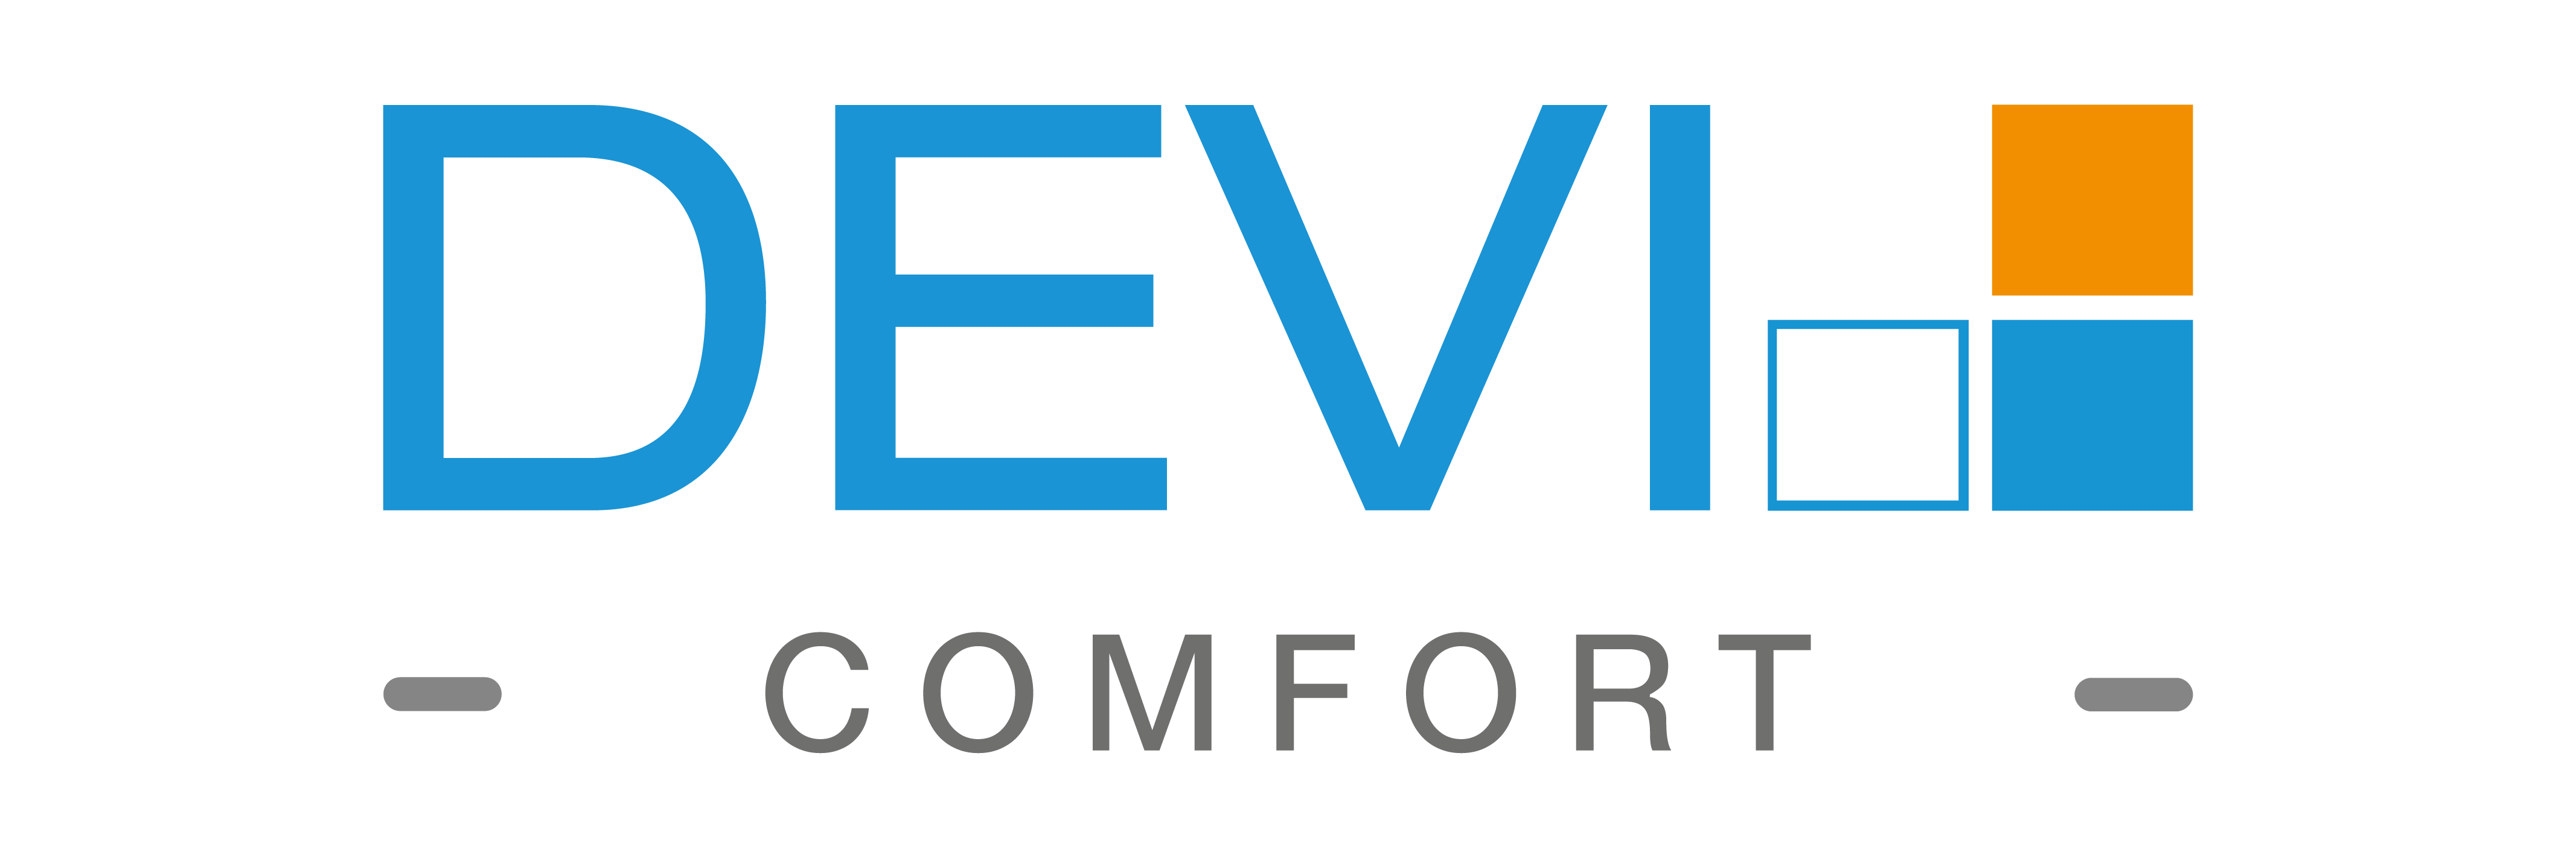 DeVi-Comfort